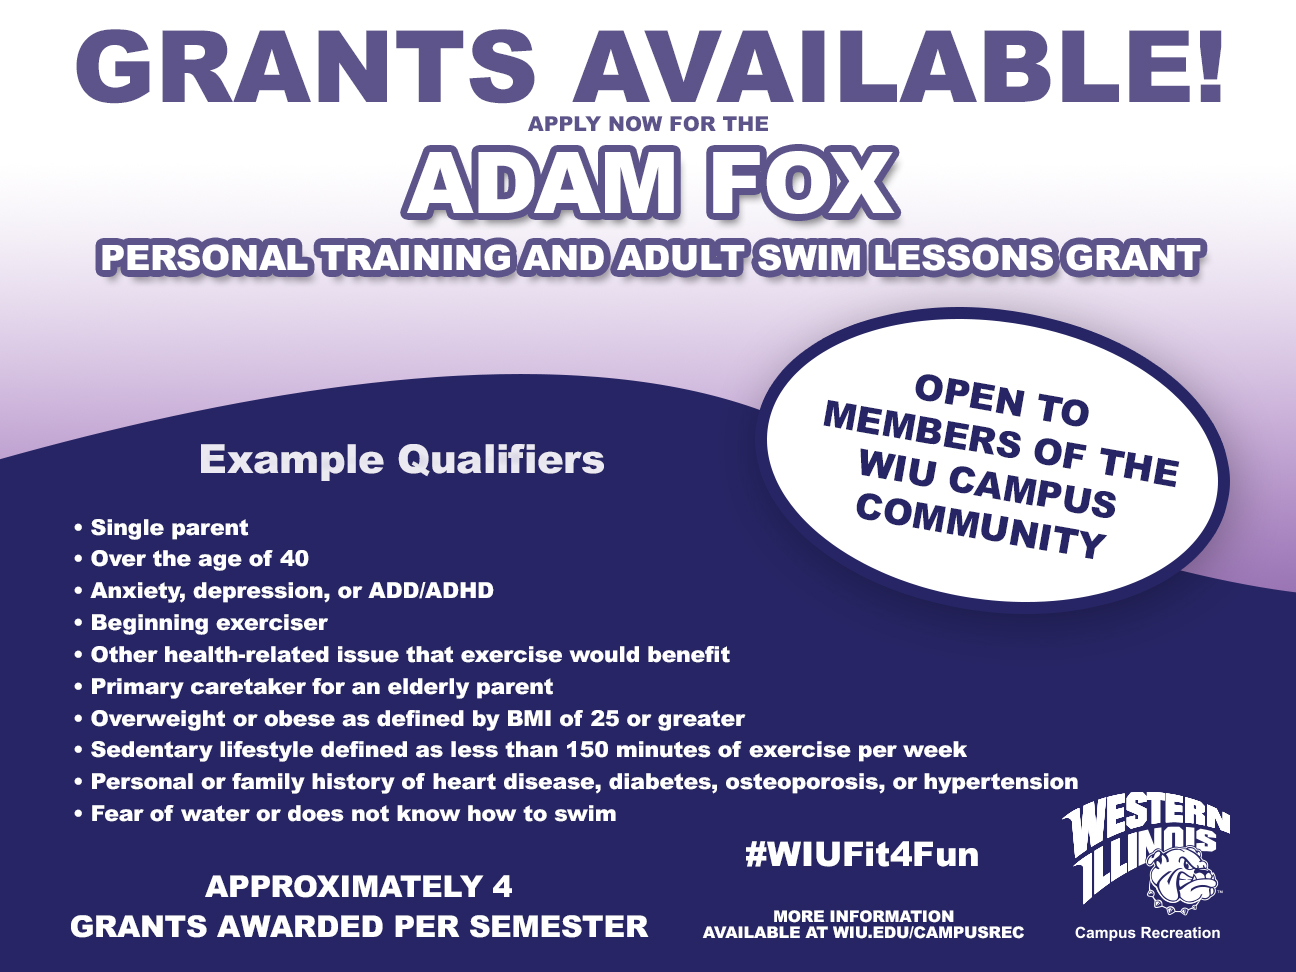 Adam Fox Personal Training and Adult Swim Lessons Grant